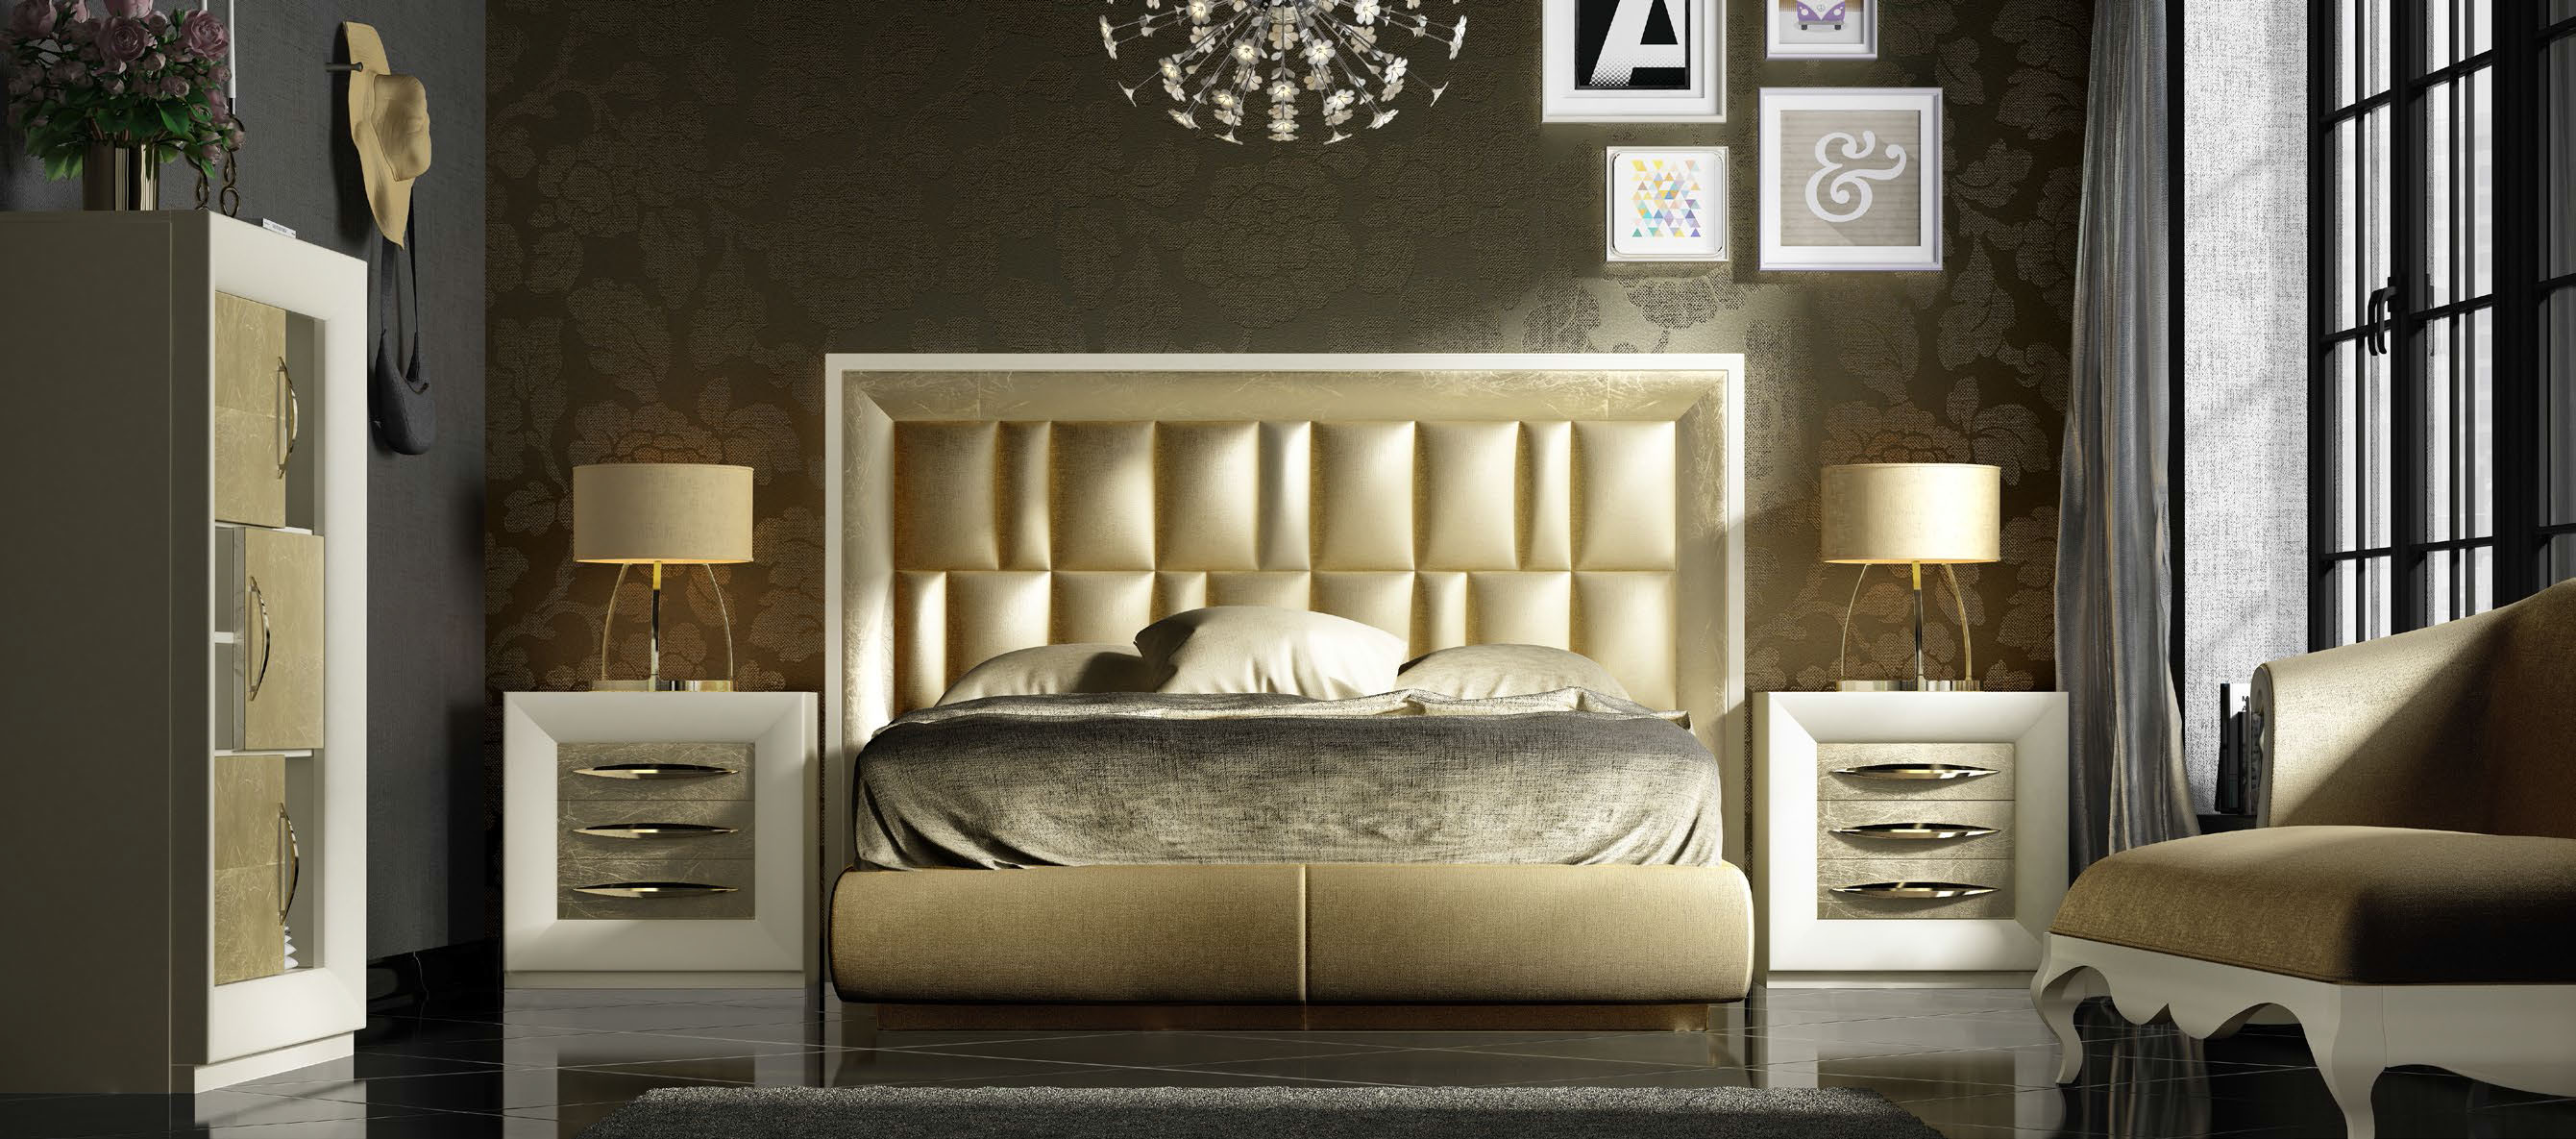 Brands Franco Furniture Bedrooms vol3, Spain DOR 118